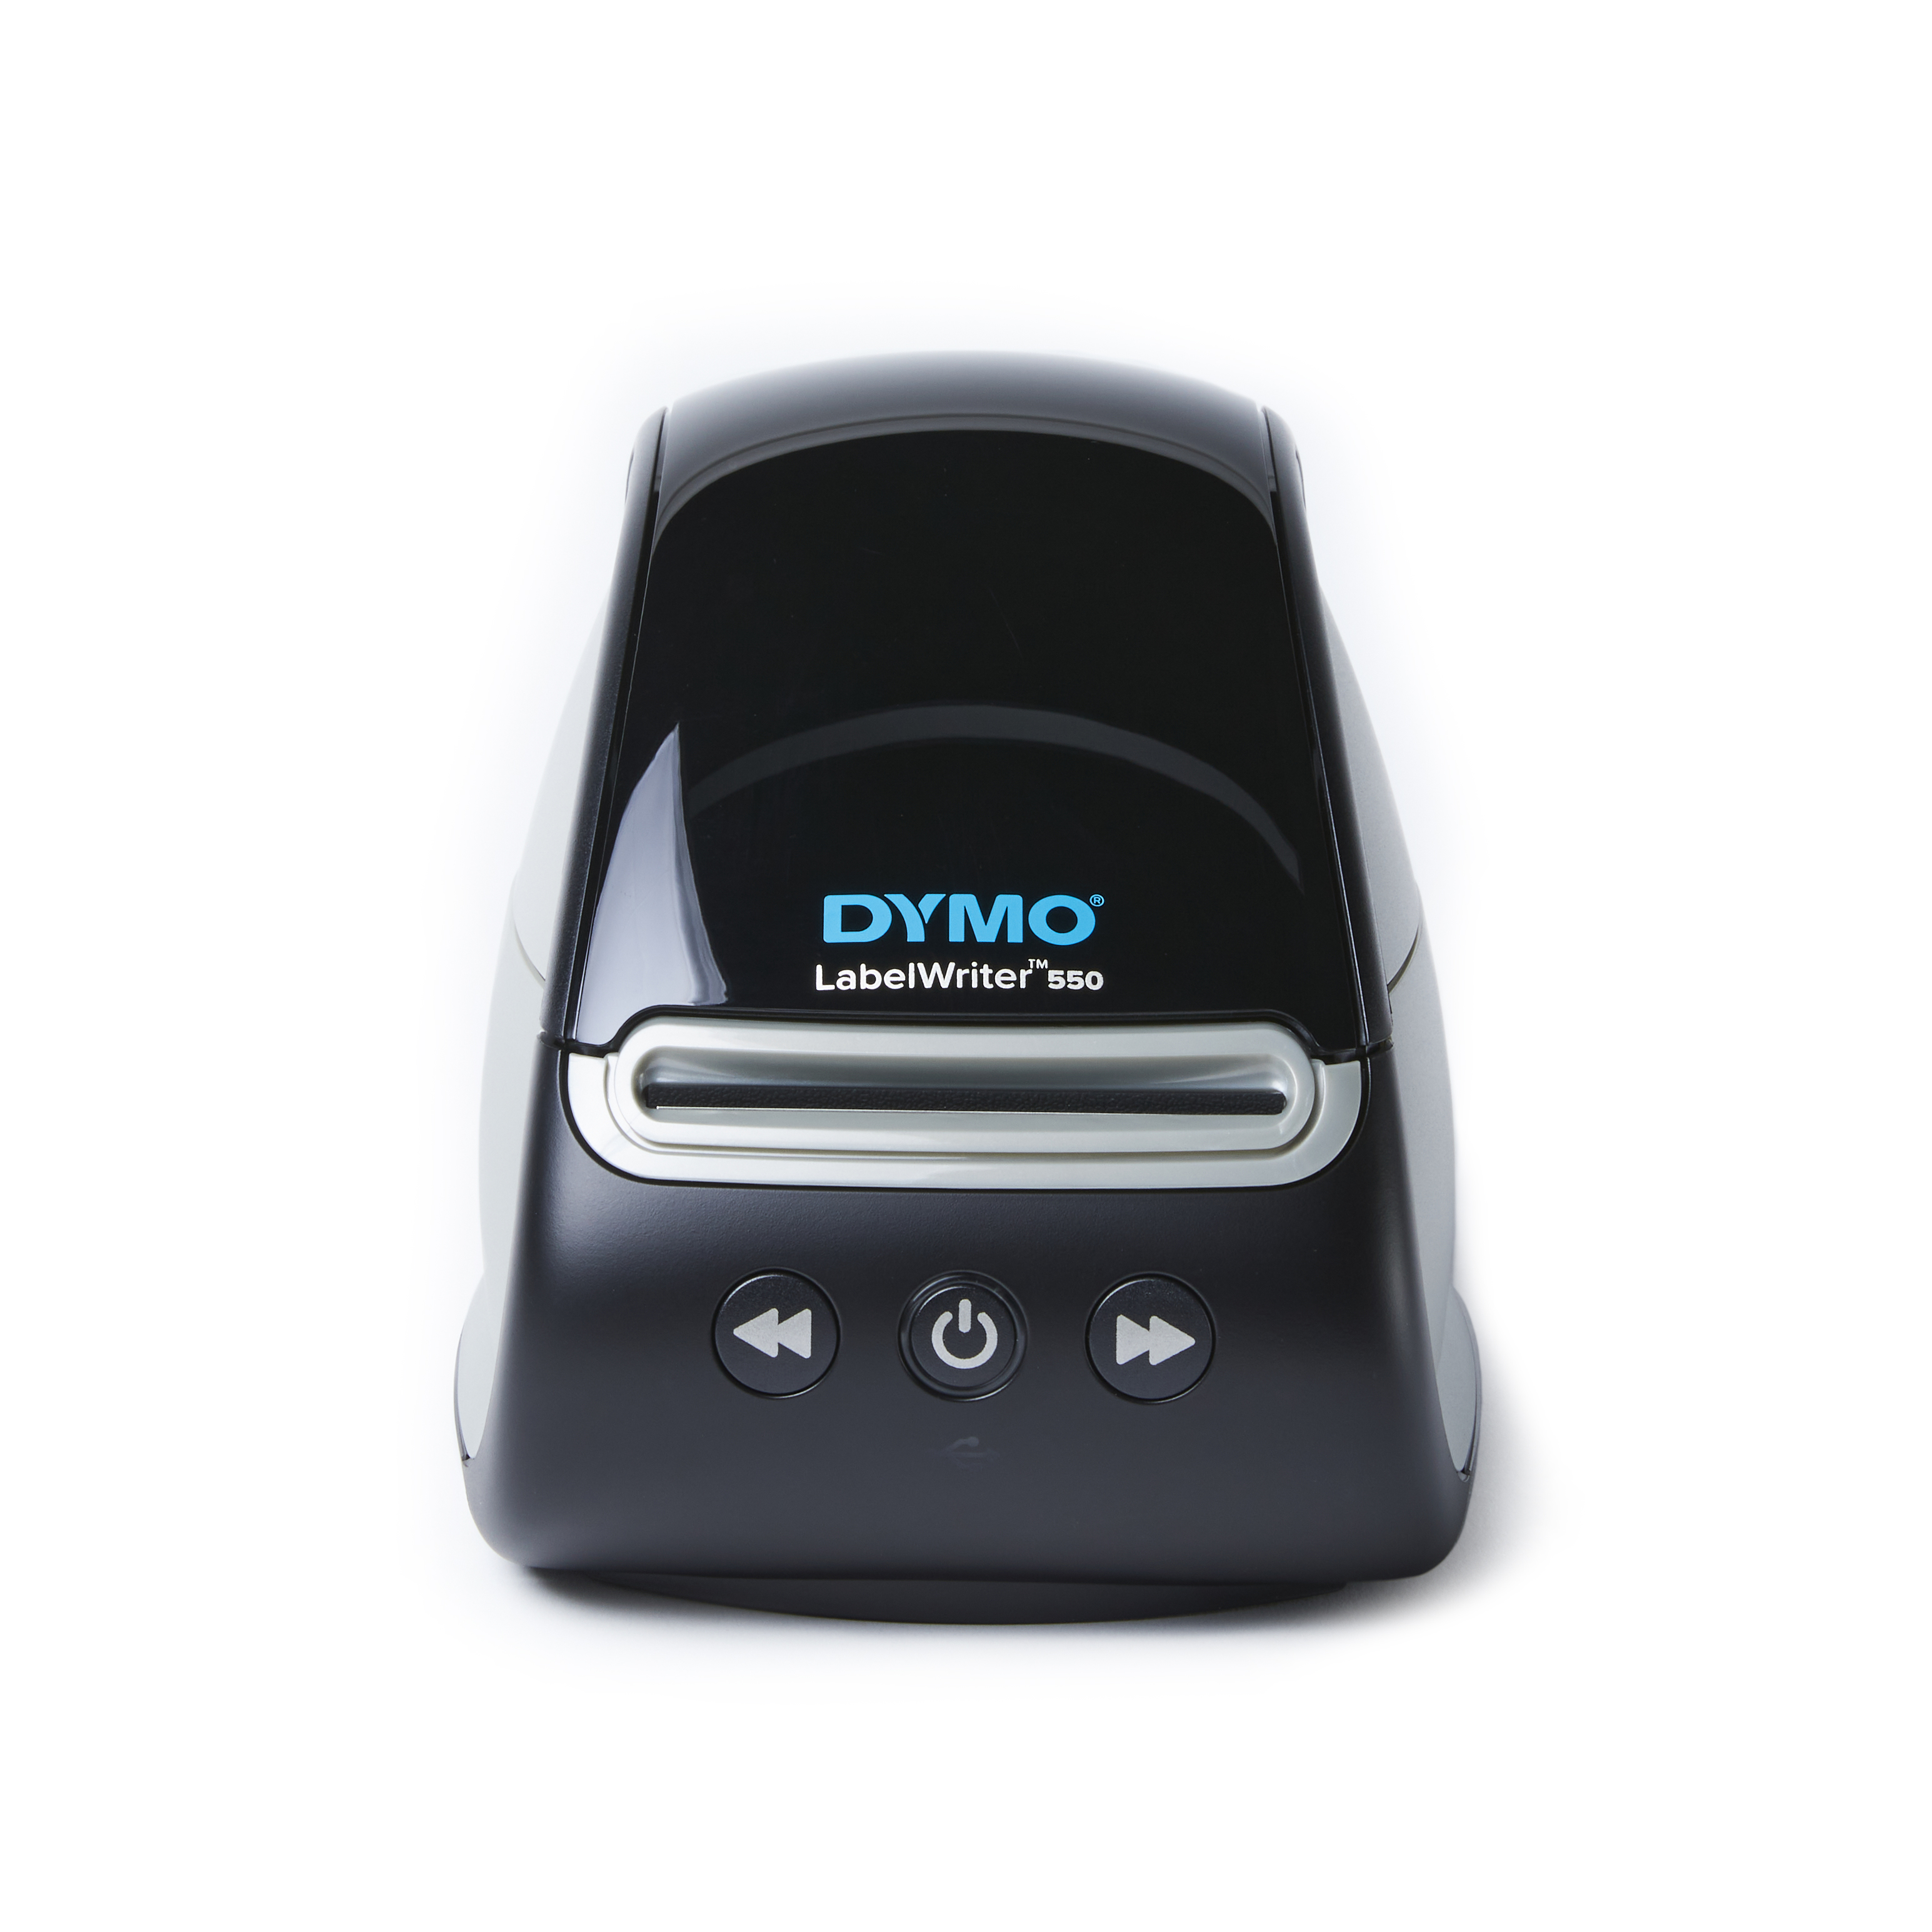 Dymo 550 label printer